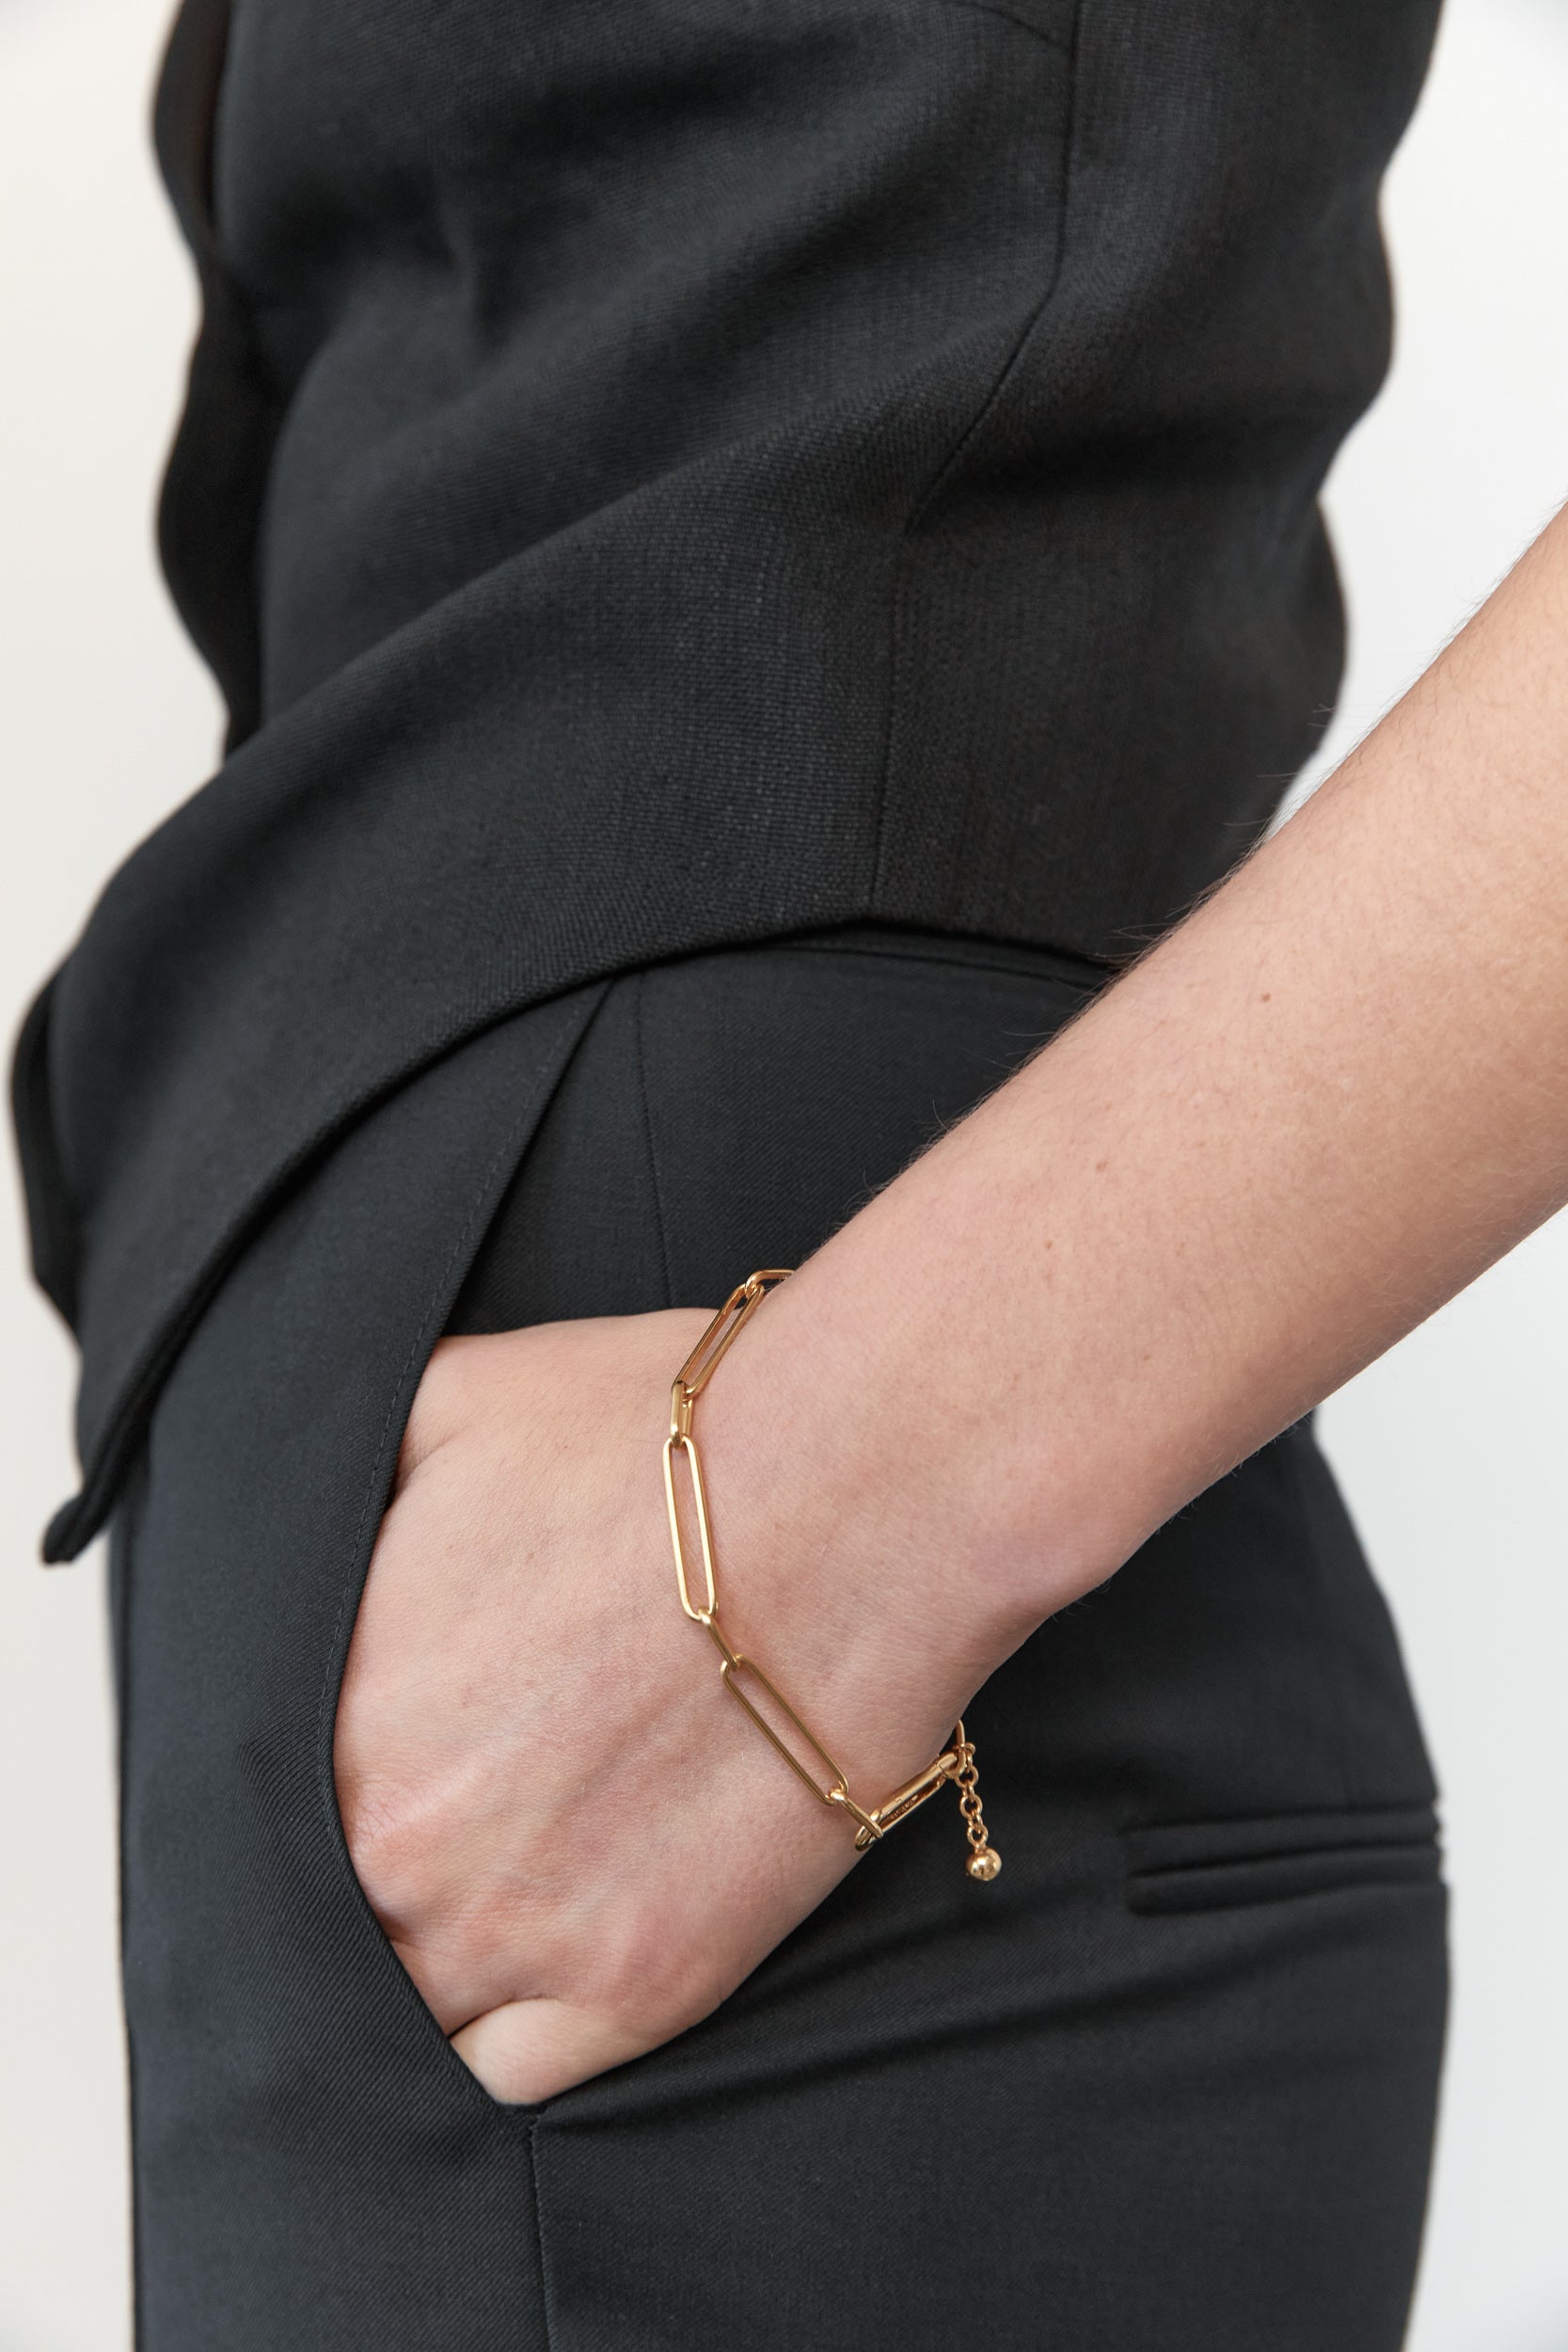 Jean Chain Bracelet - 14k Gold Plated